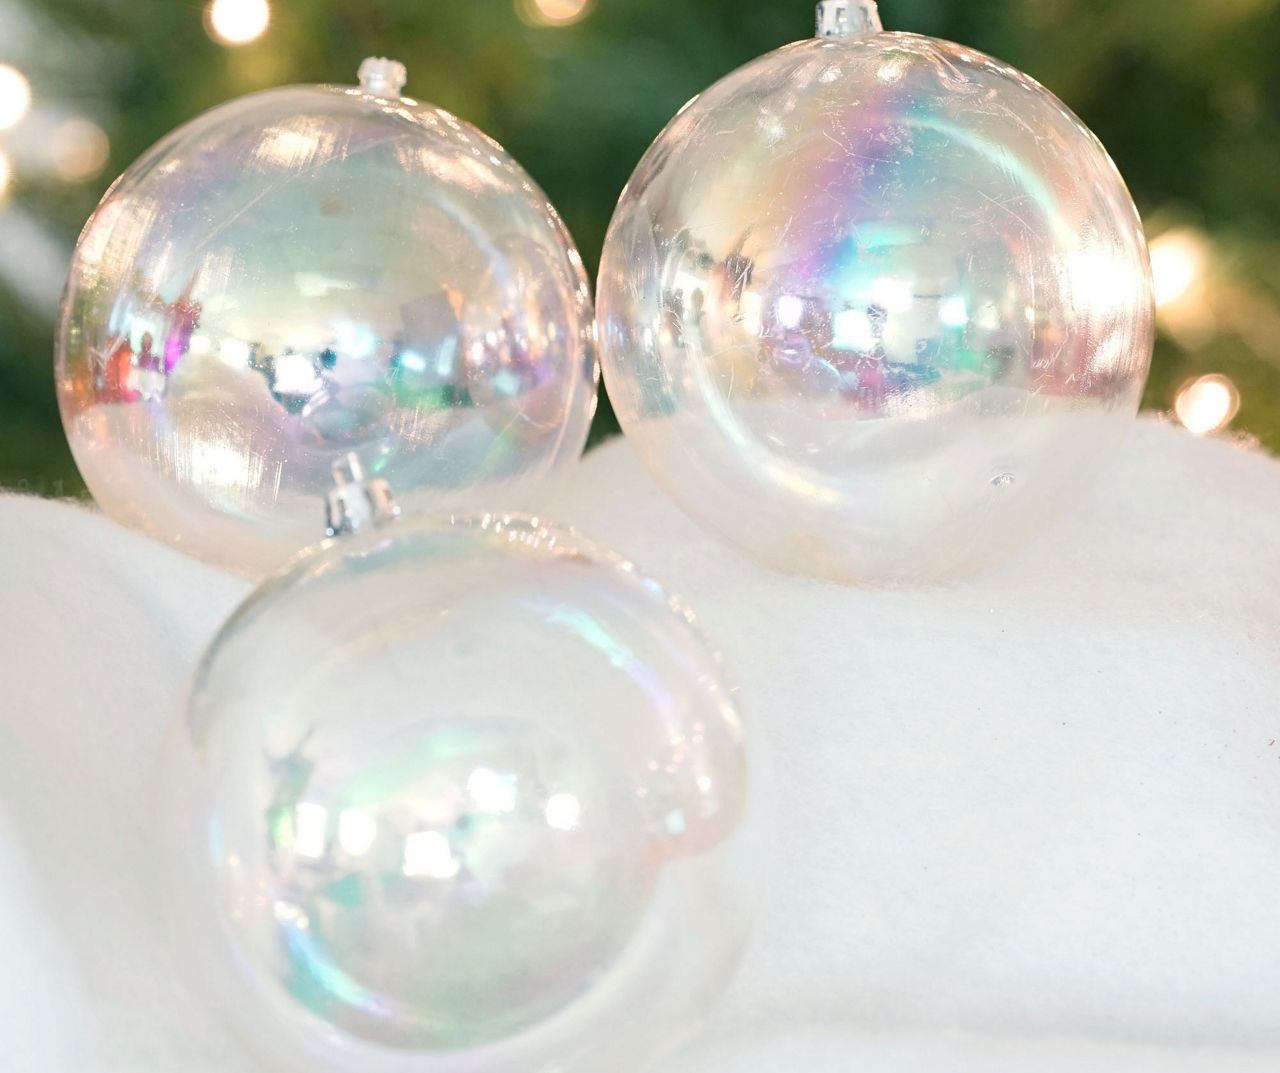  Funtery Christmas Iridescent Plastic Ornaments Balls